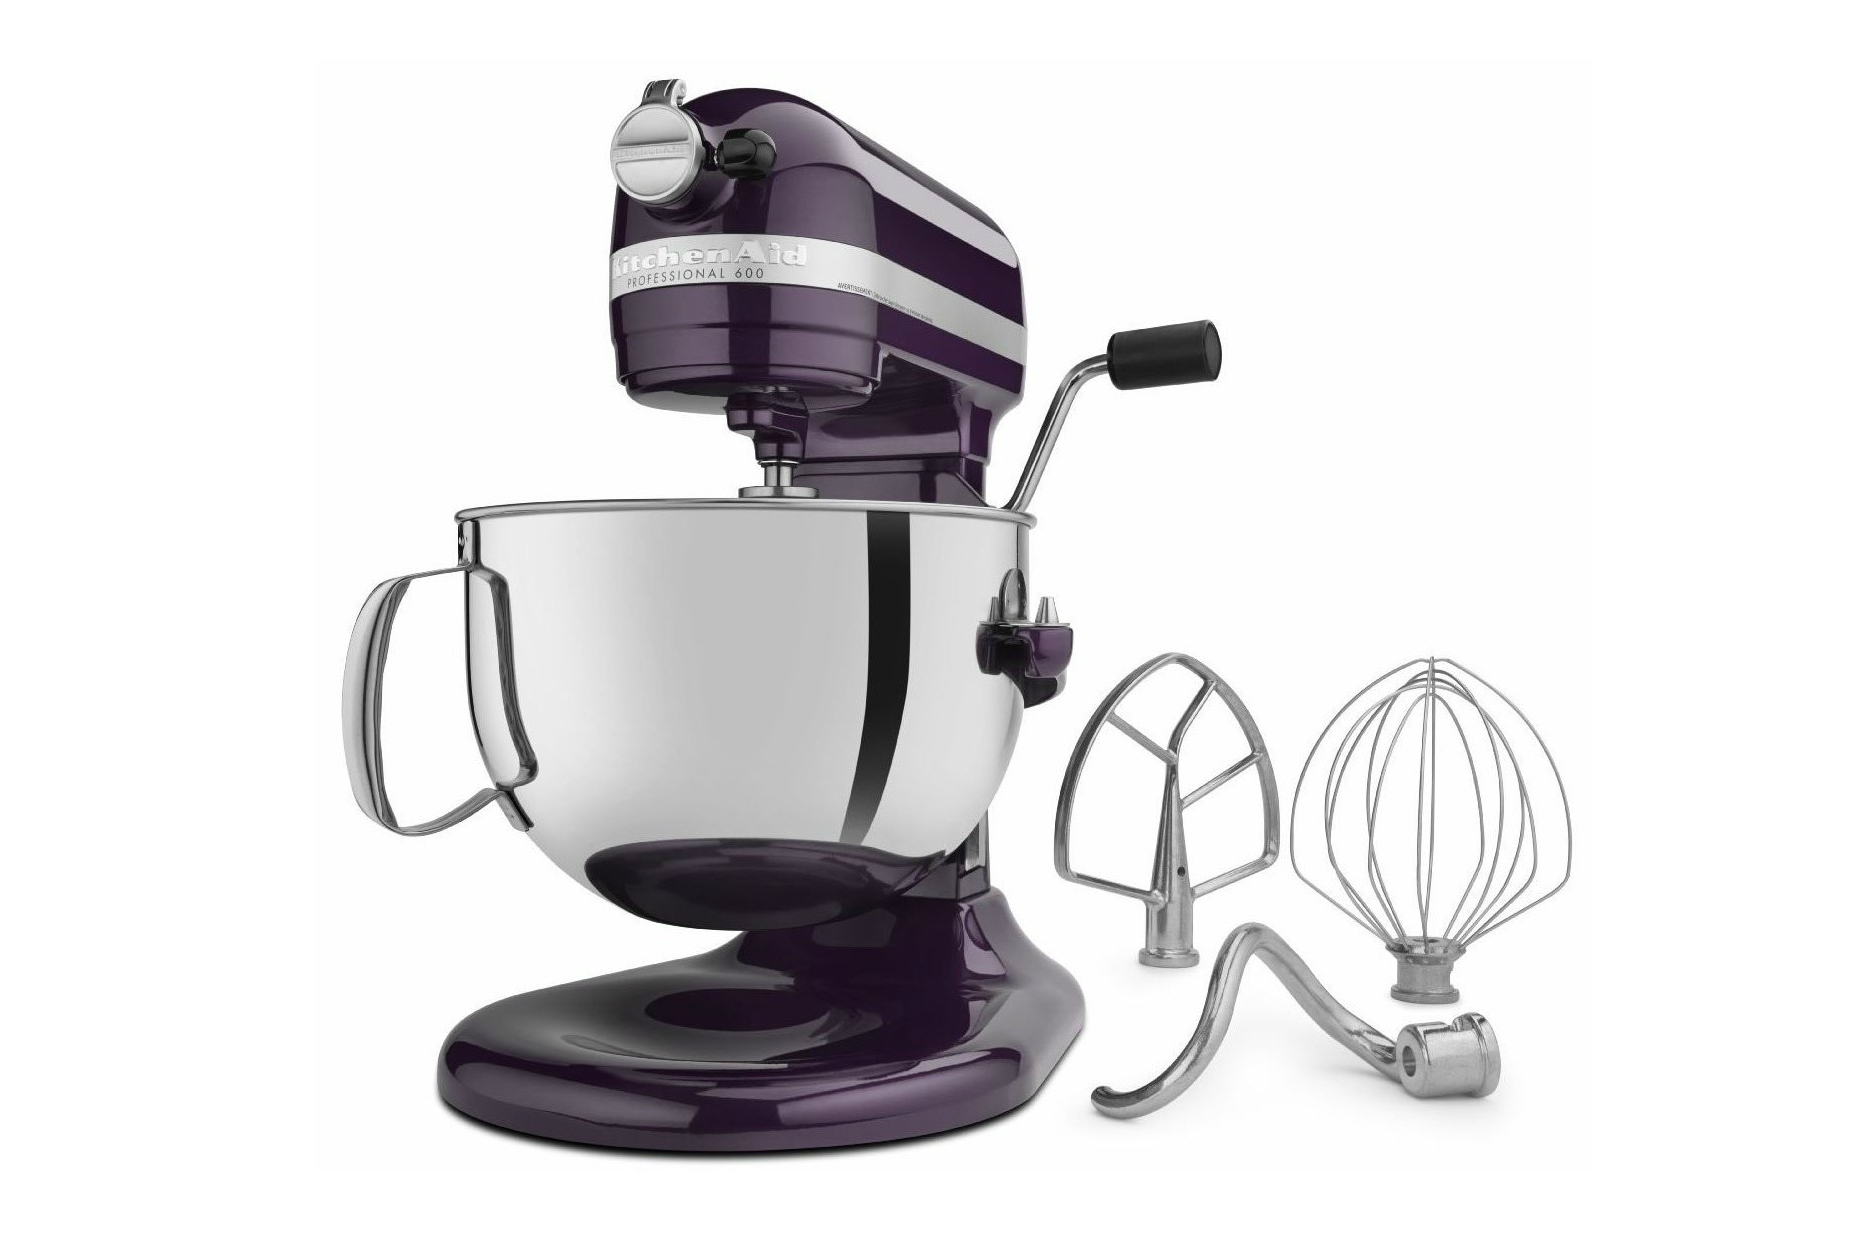 https://www.digitaltrends.com/wp-content/uploads/2019/07/kitchenaid-professional-600-series-bowl-lift-stand-mixer-6-quart-purple-plumberry.jpg?fit=1858%2C1238&p=1